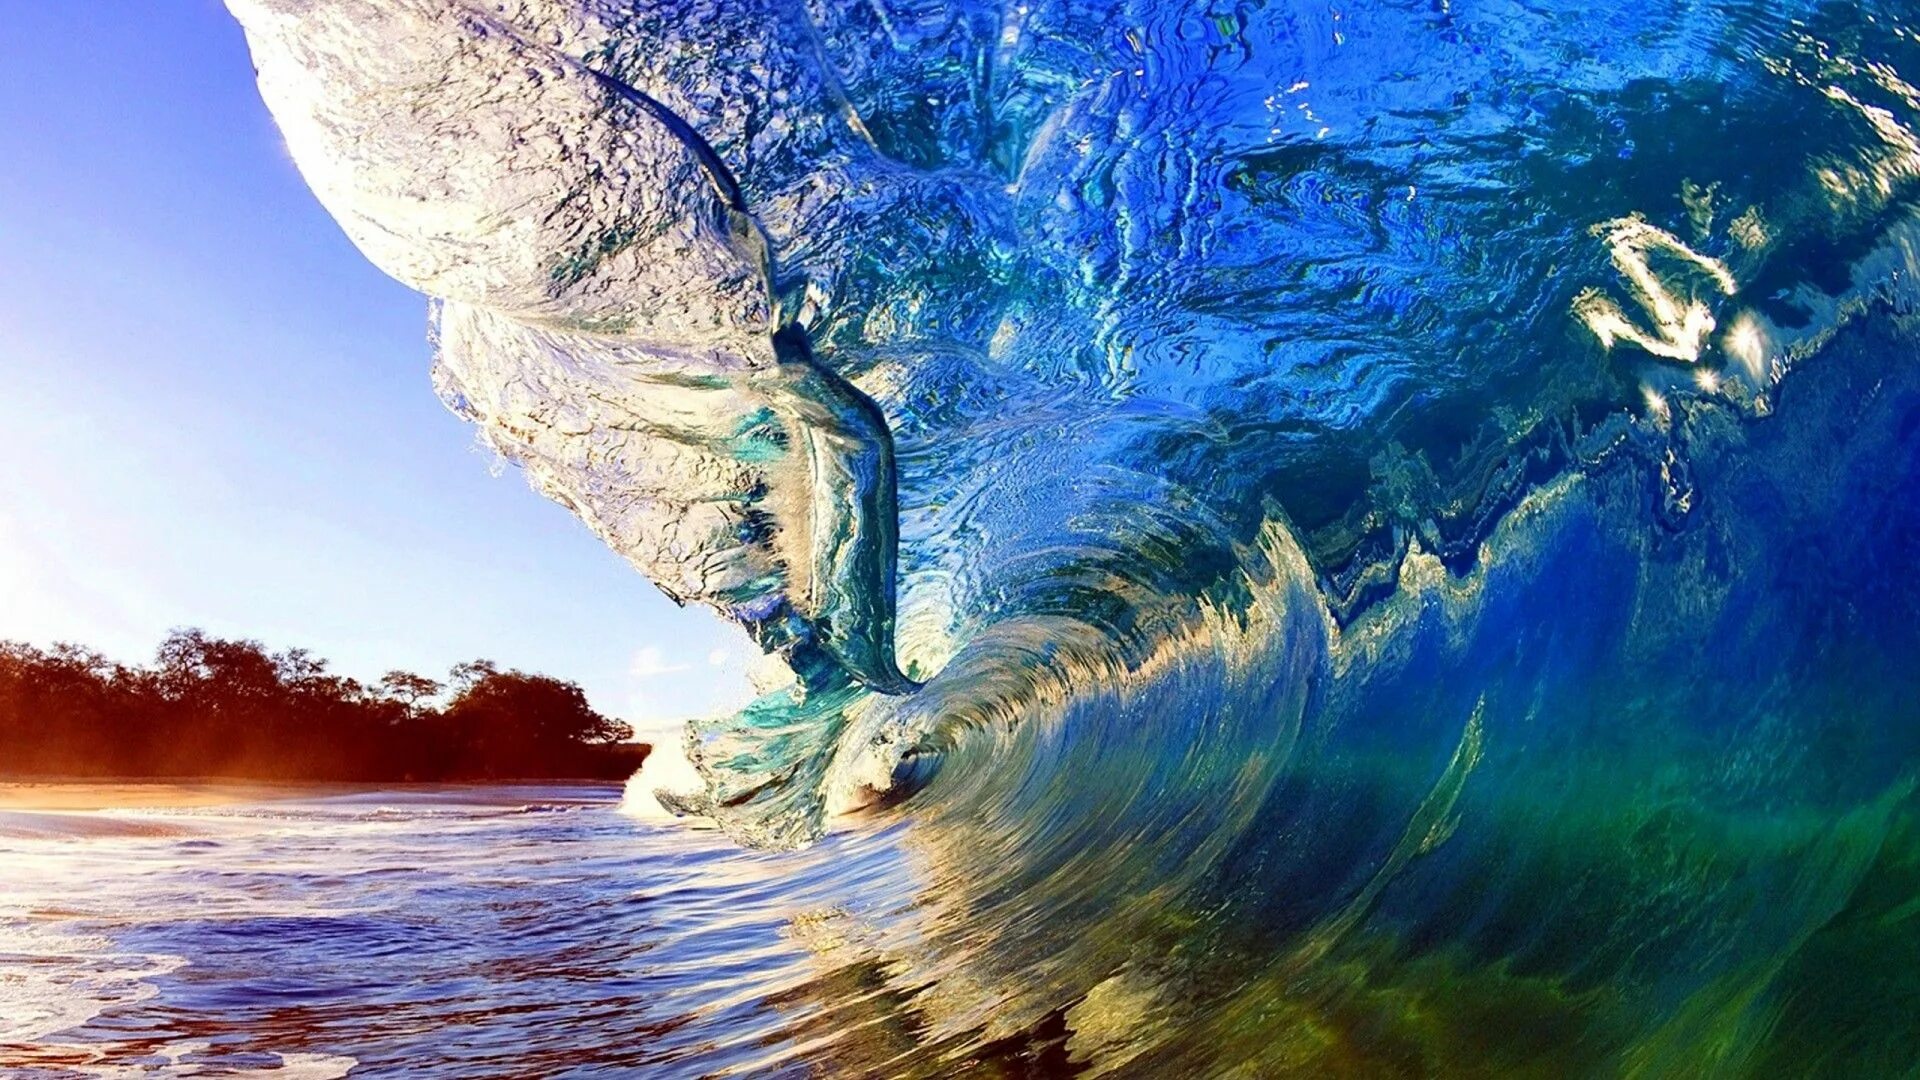 Обои на телефон на большой экран. Природа море. Море, волны. Красивые волны. Красивый океан.